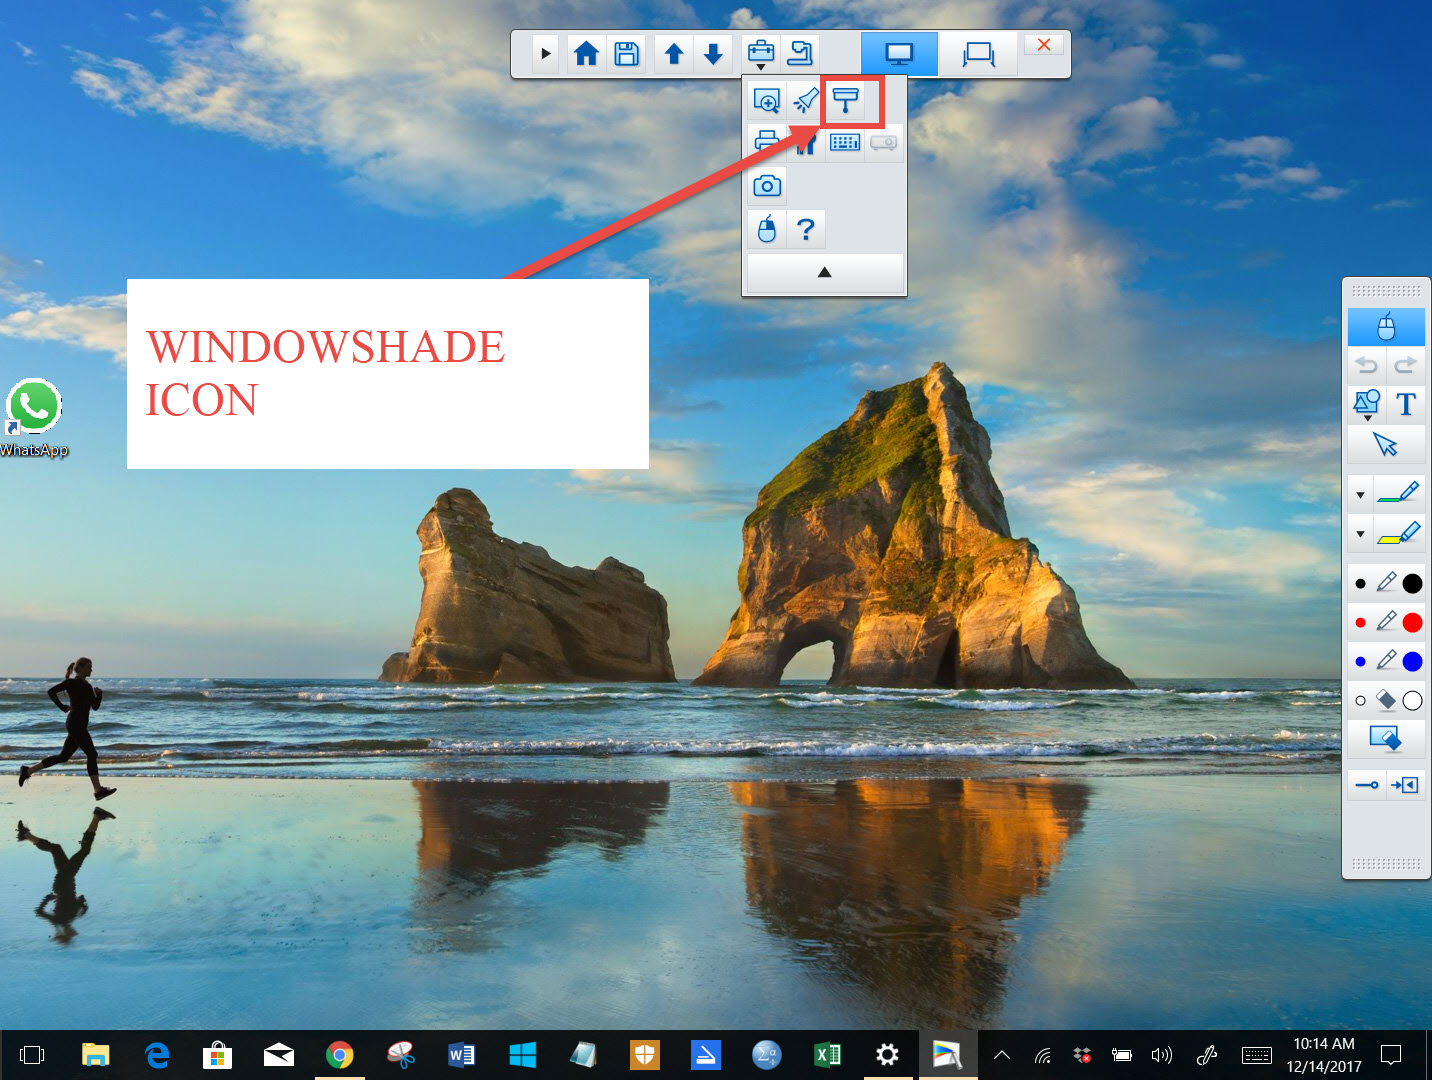 select windowshade icon